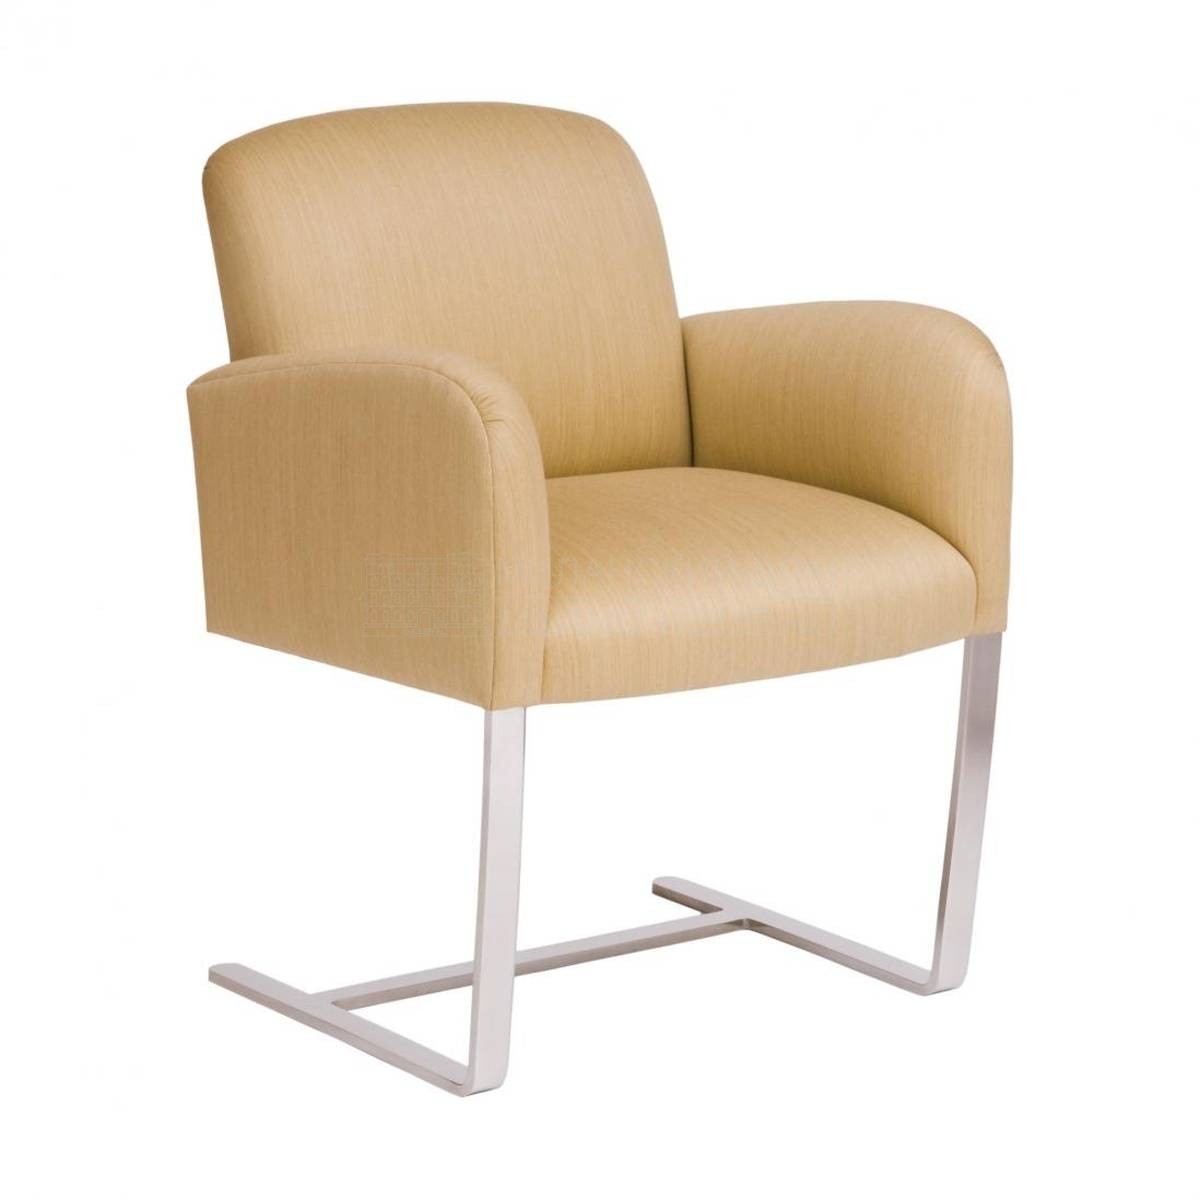 Полукресло Cantilever Arm Chair из Италии фабрики RUBELLI Casa